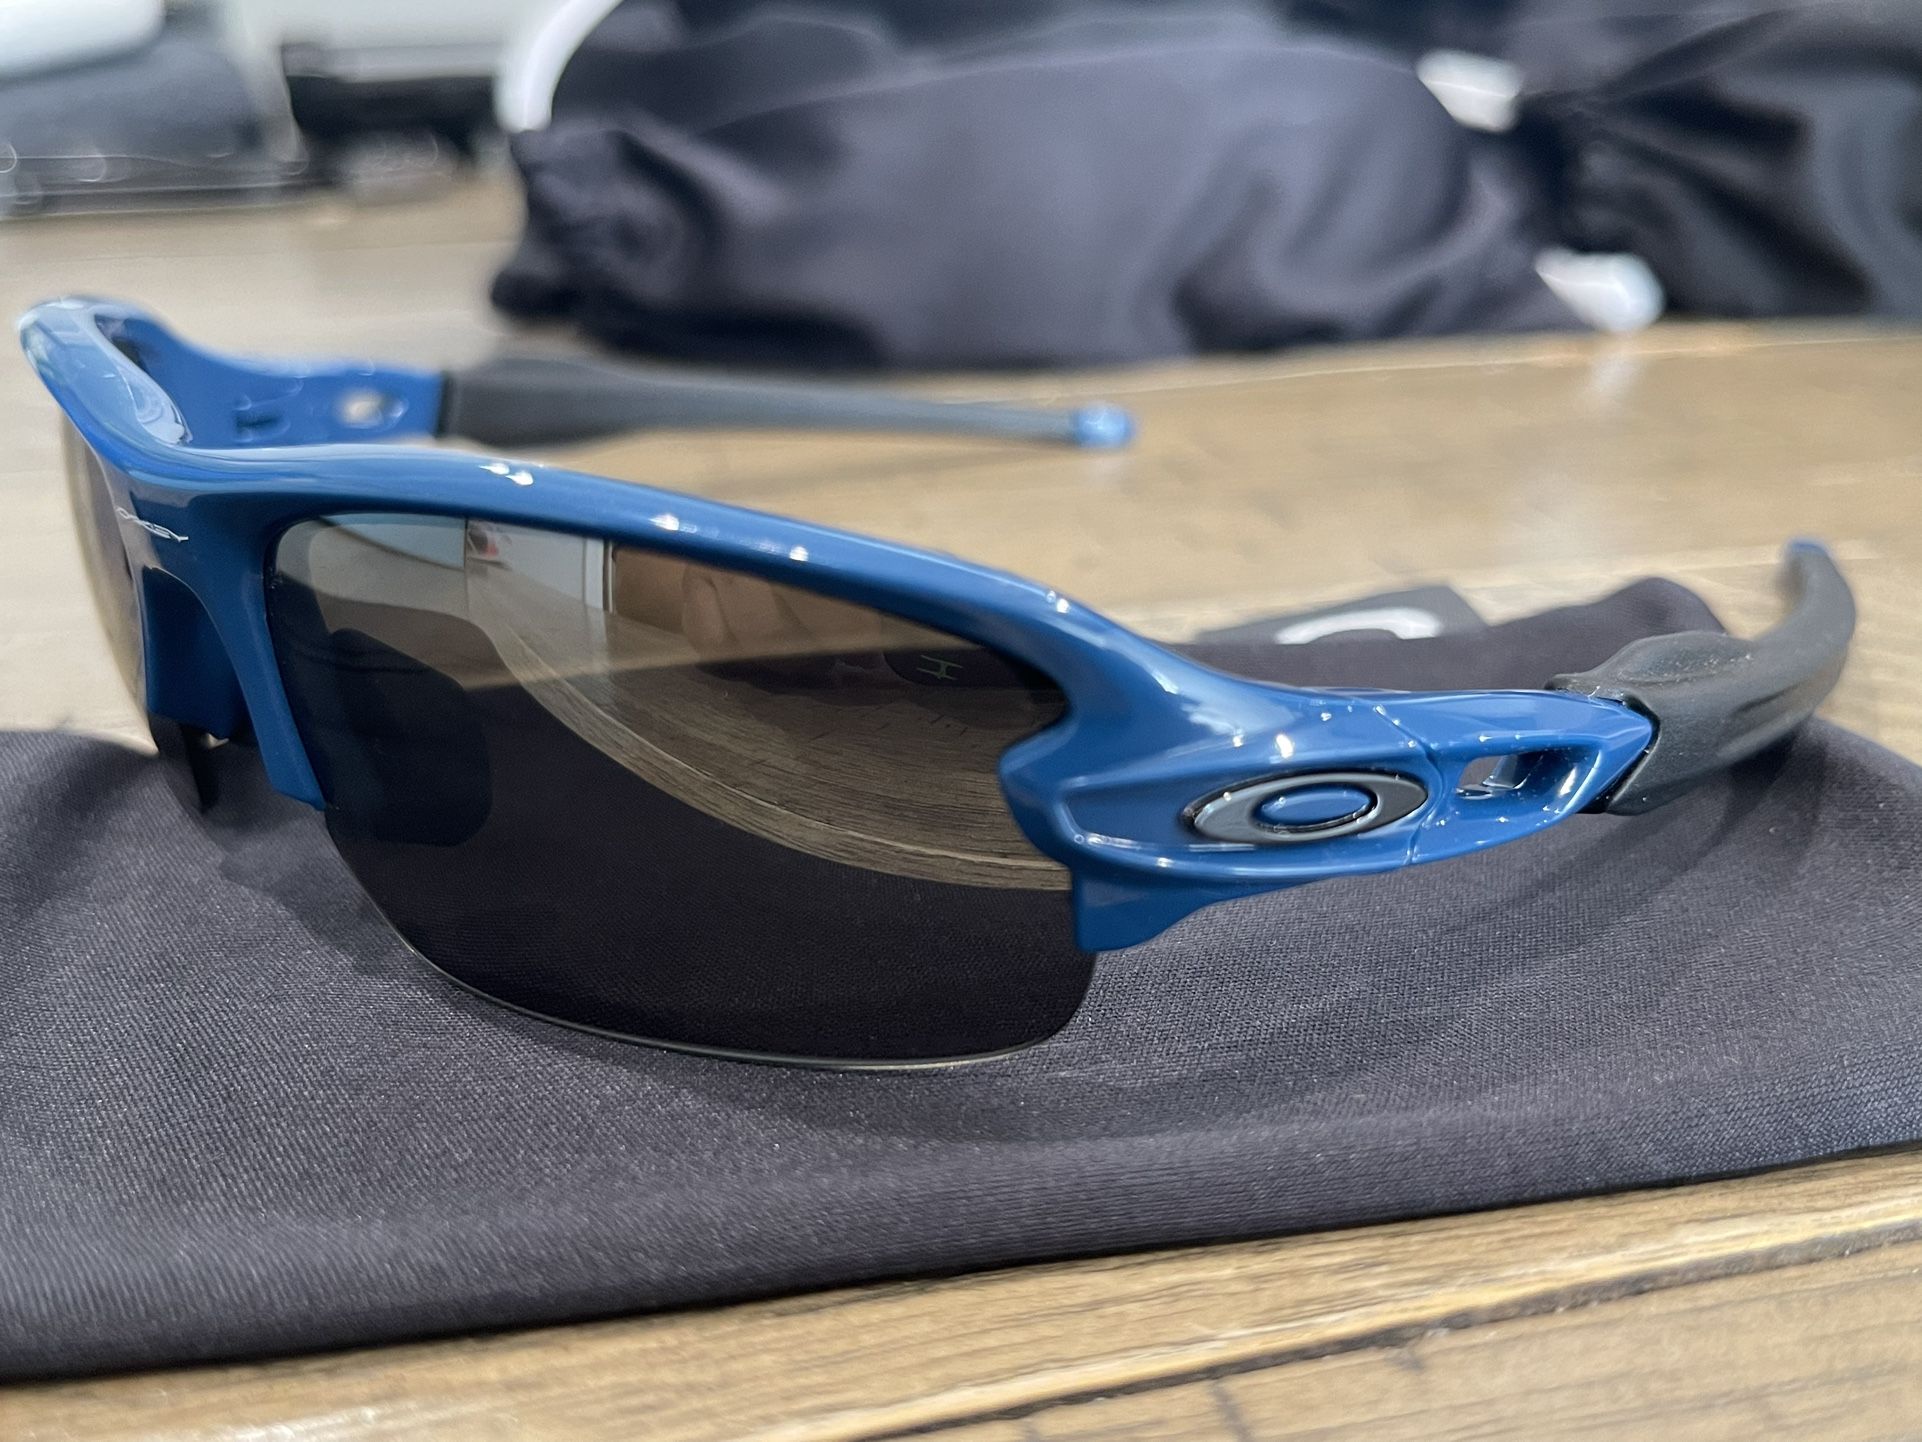 Oakley Sunglasses Flak 2.0 Low Bridge Fit